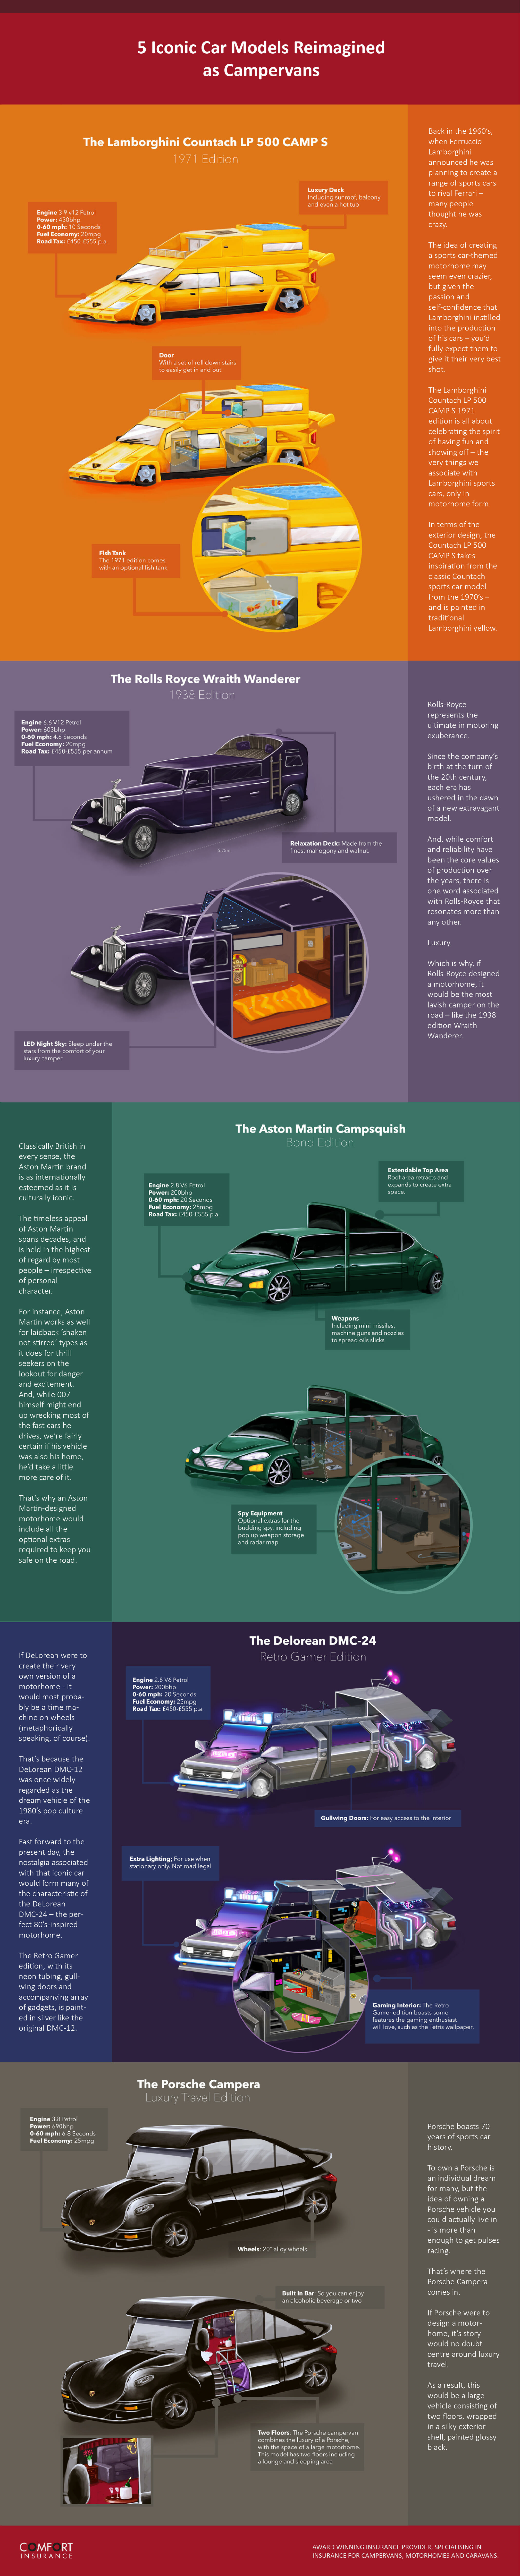 Iconic Car Models Re-imagined as Campervans